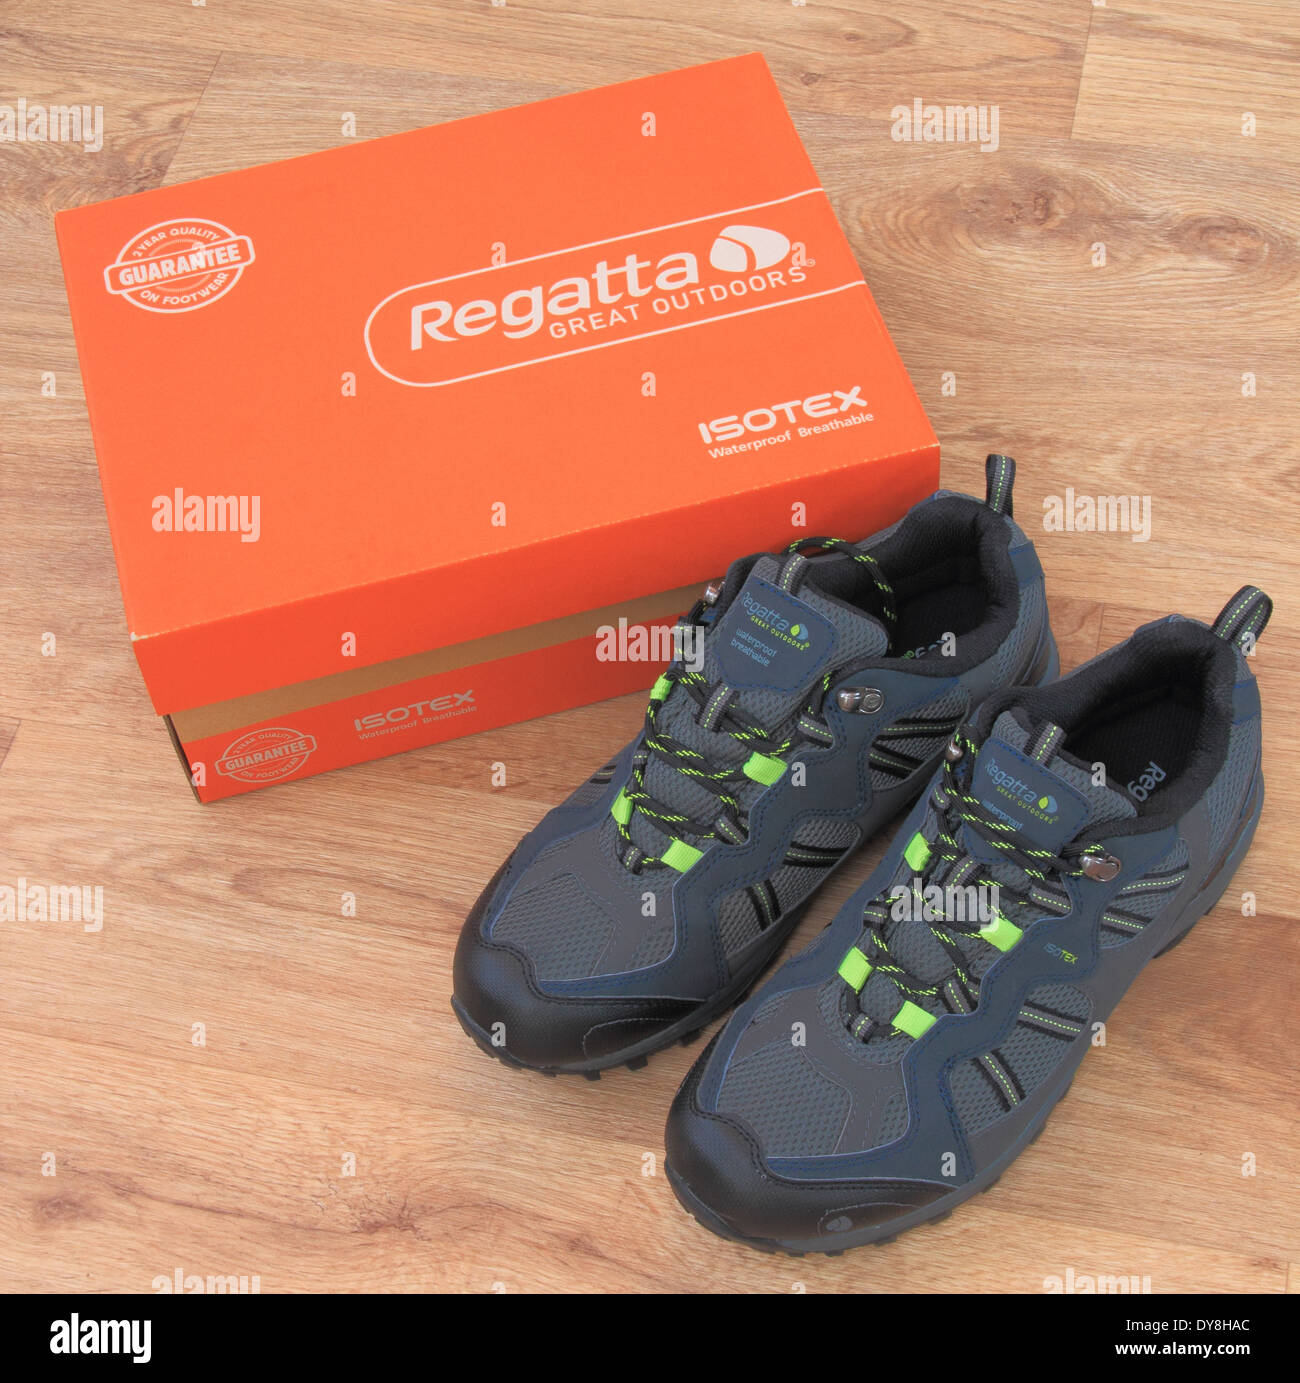 Men's Regatta Walking Boots with Shoe Box, UK Stock Photo - Alamy